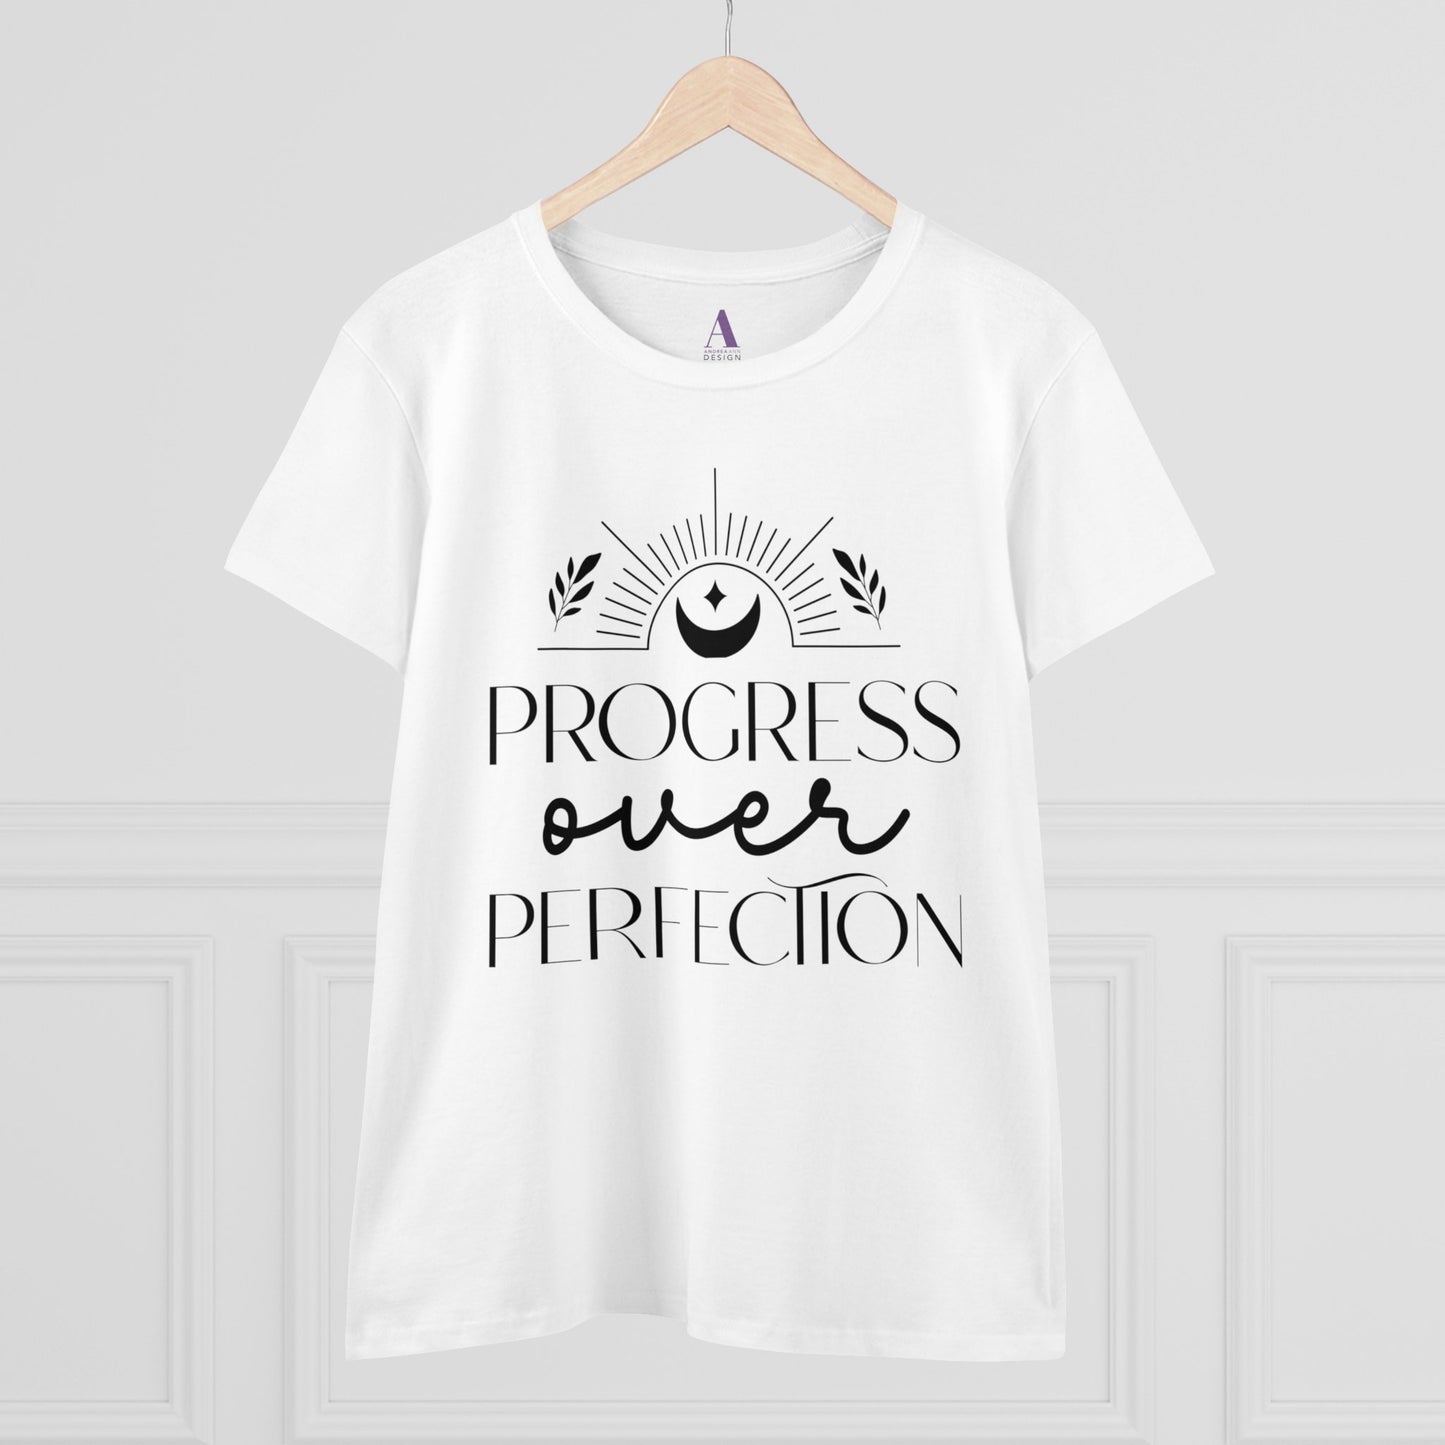 Boho Design Tee with "Progress Over Perfection" Slogan